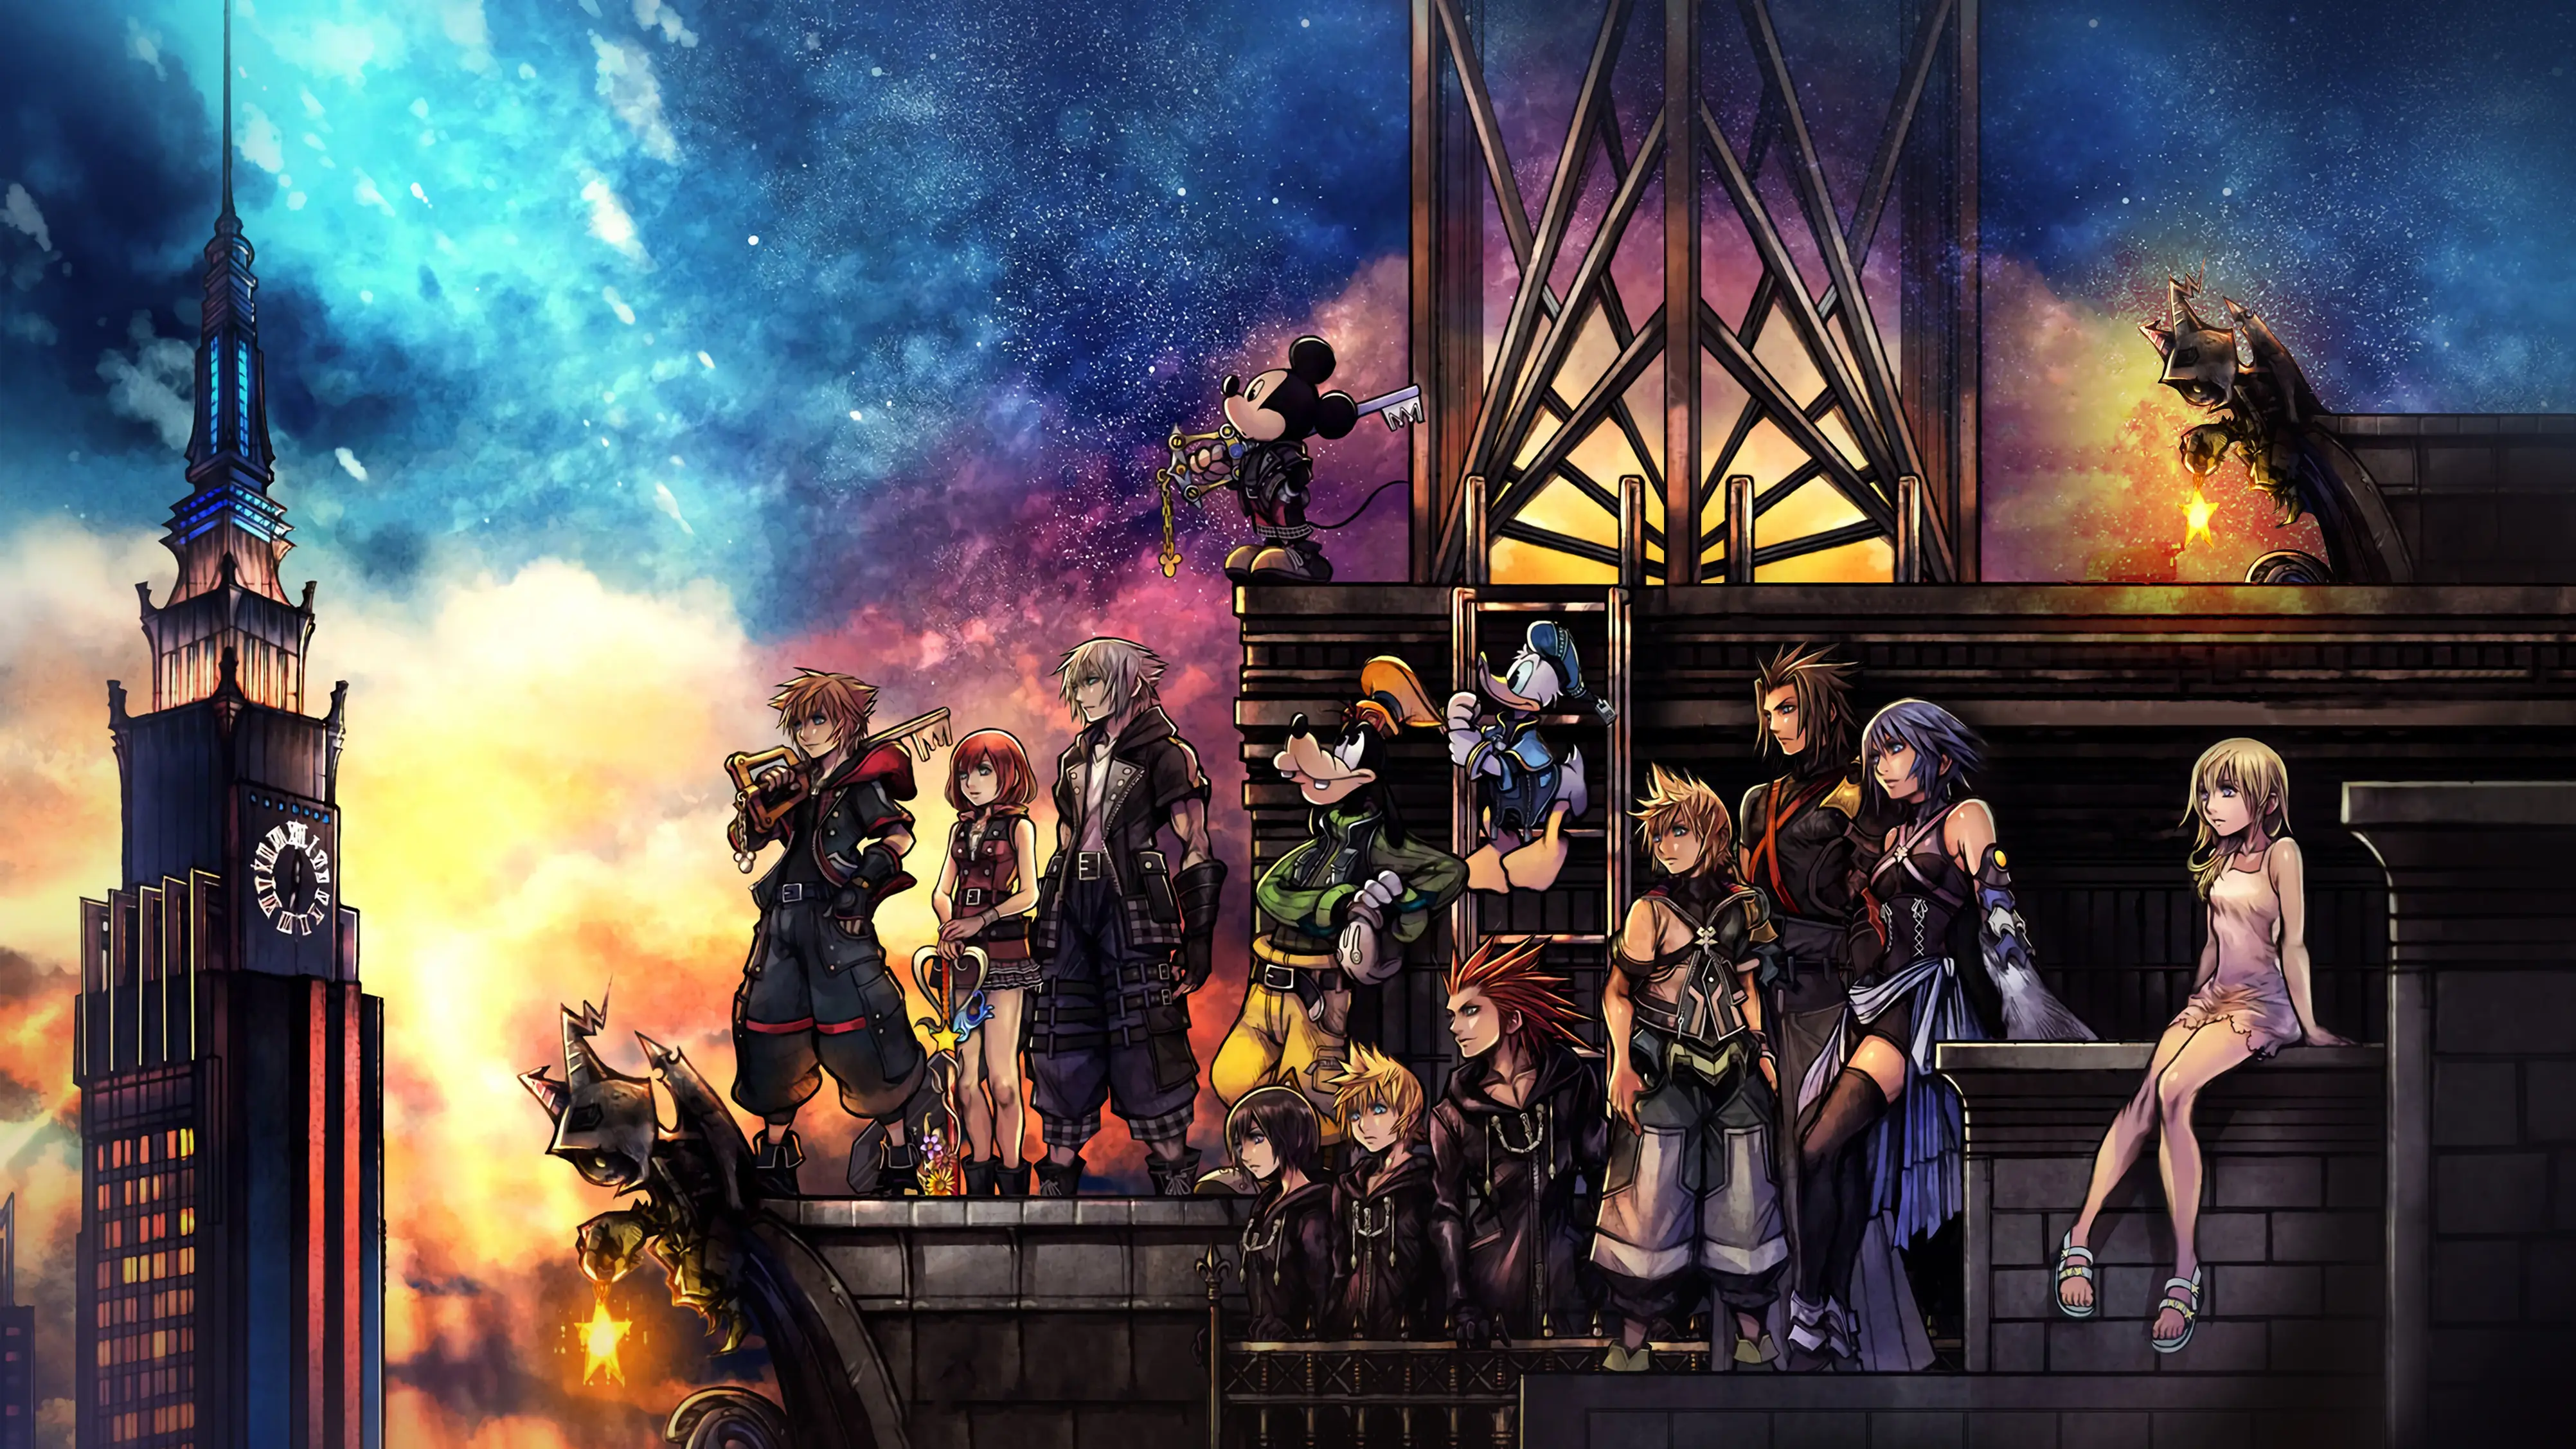 Game Kingdom Hearts 3 background 21 | Background Image